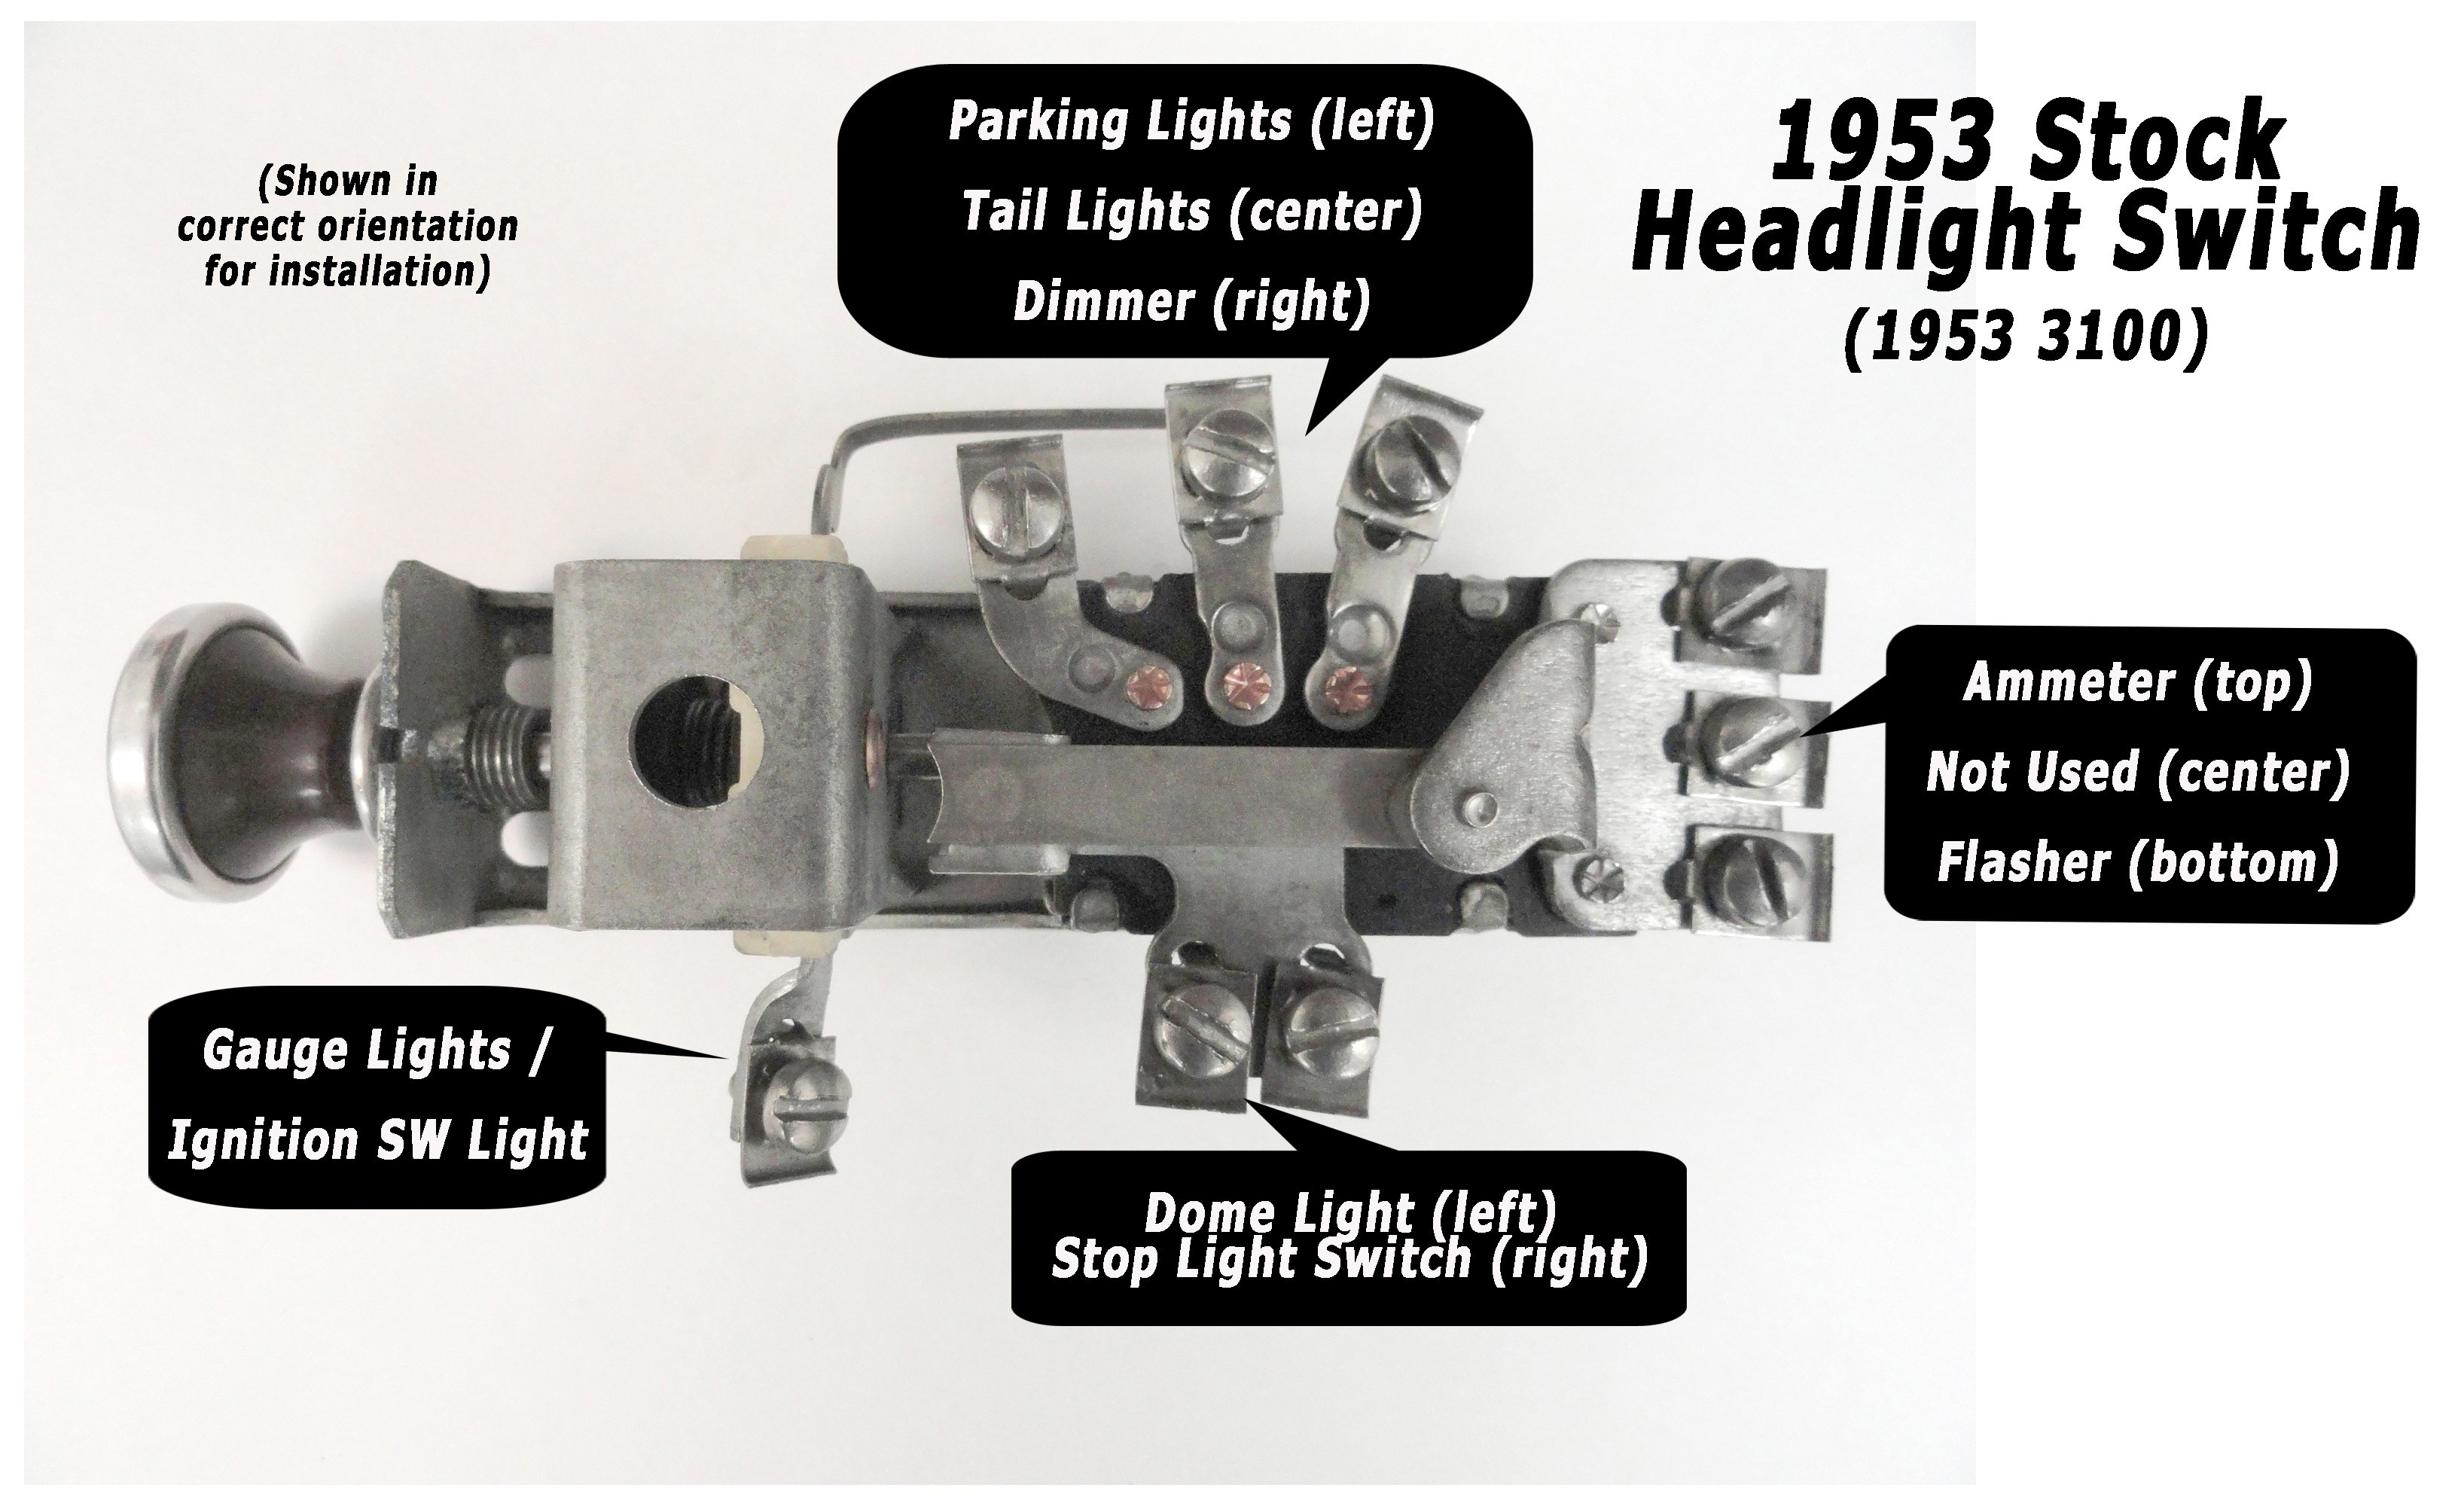 Headlight Switch Wiring Diagram Chevy Tr | Philteg.in - Headlight Switch Wiring Diagram Chevy Truck